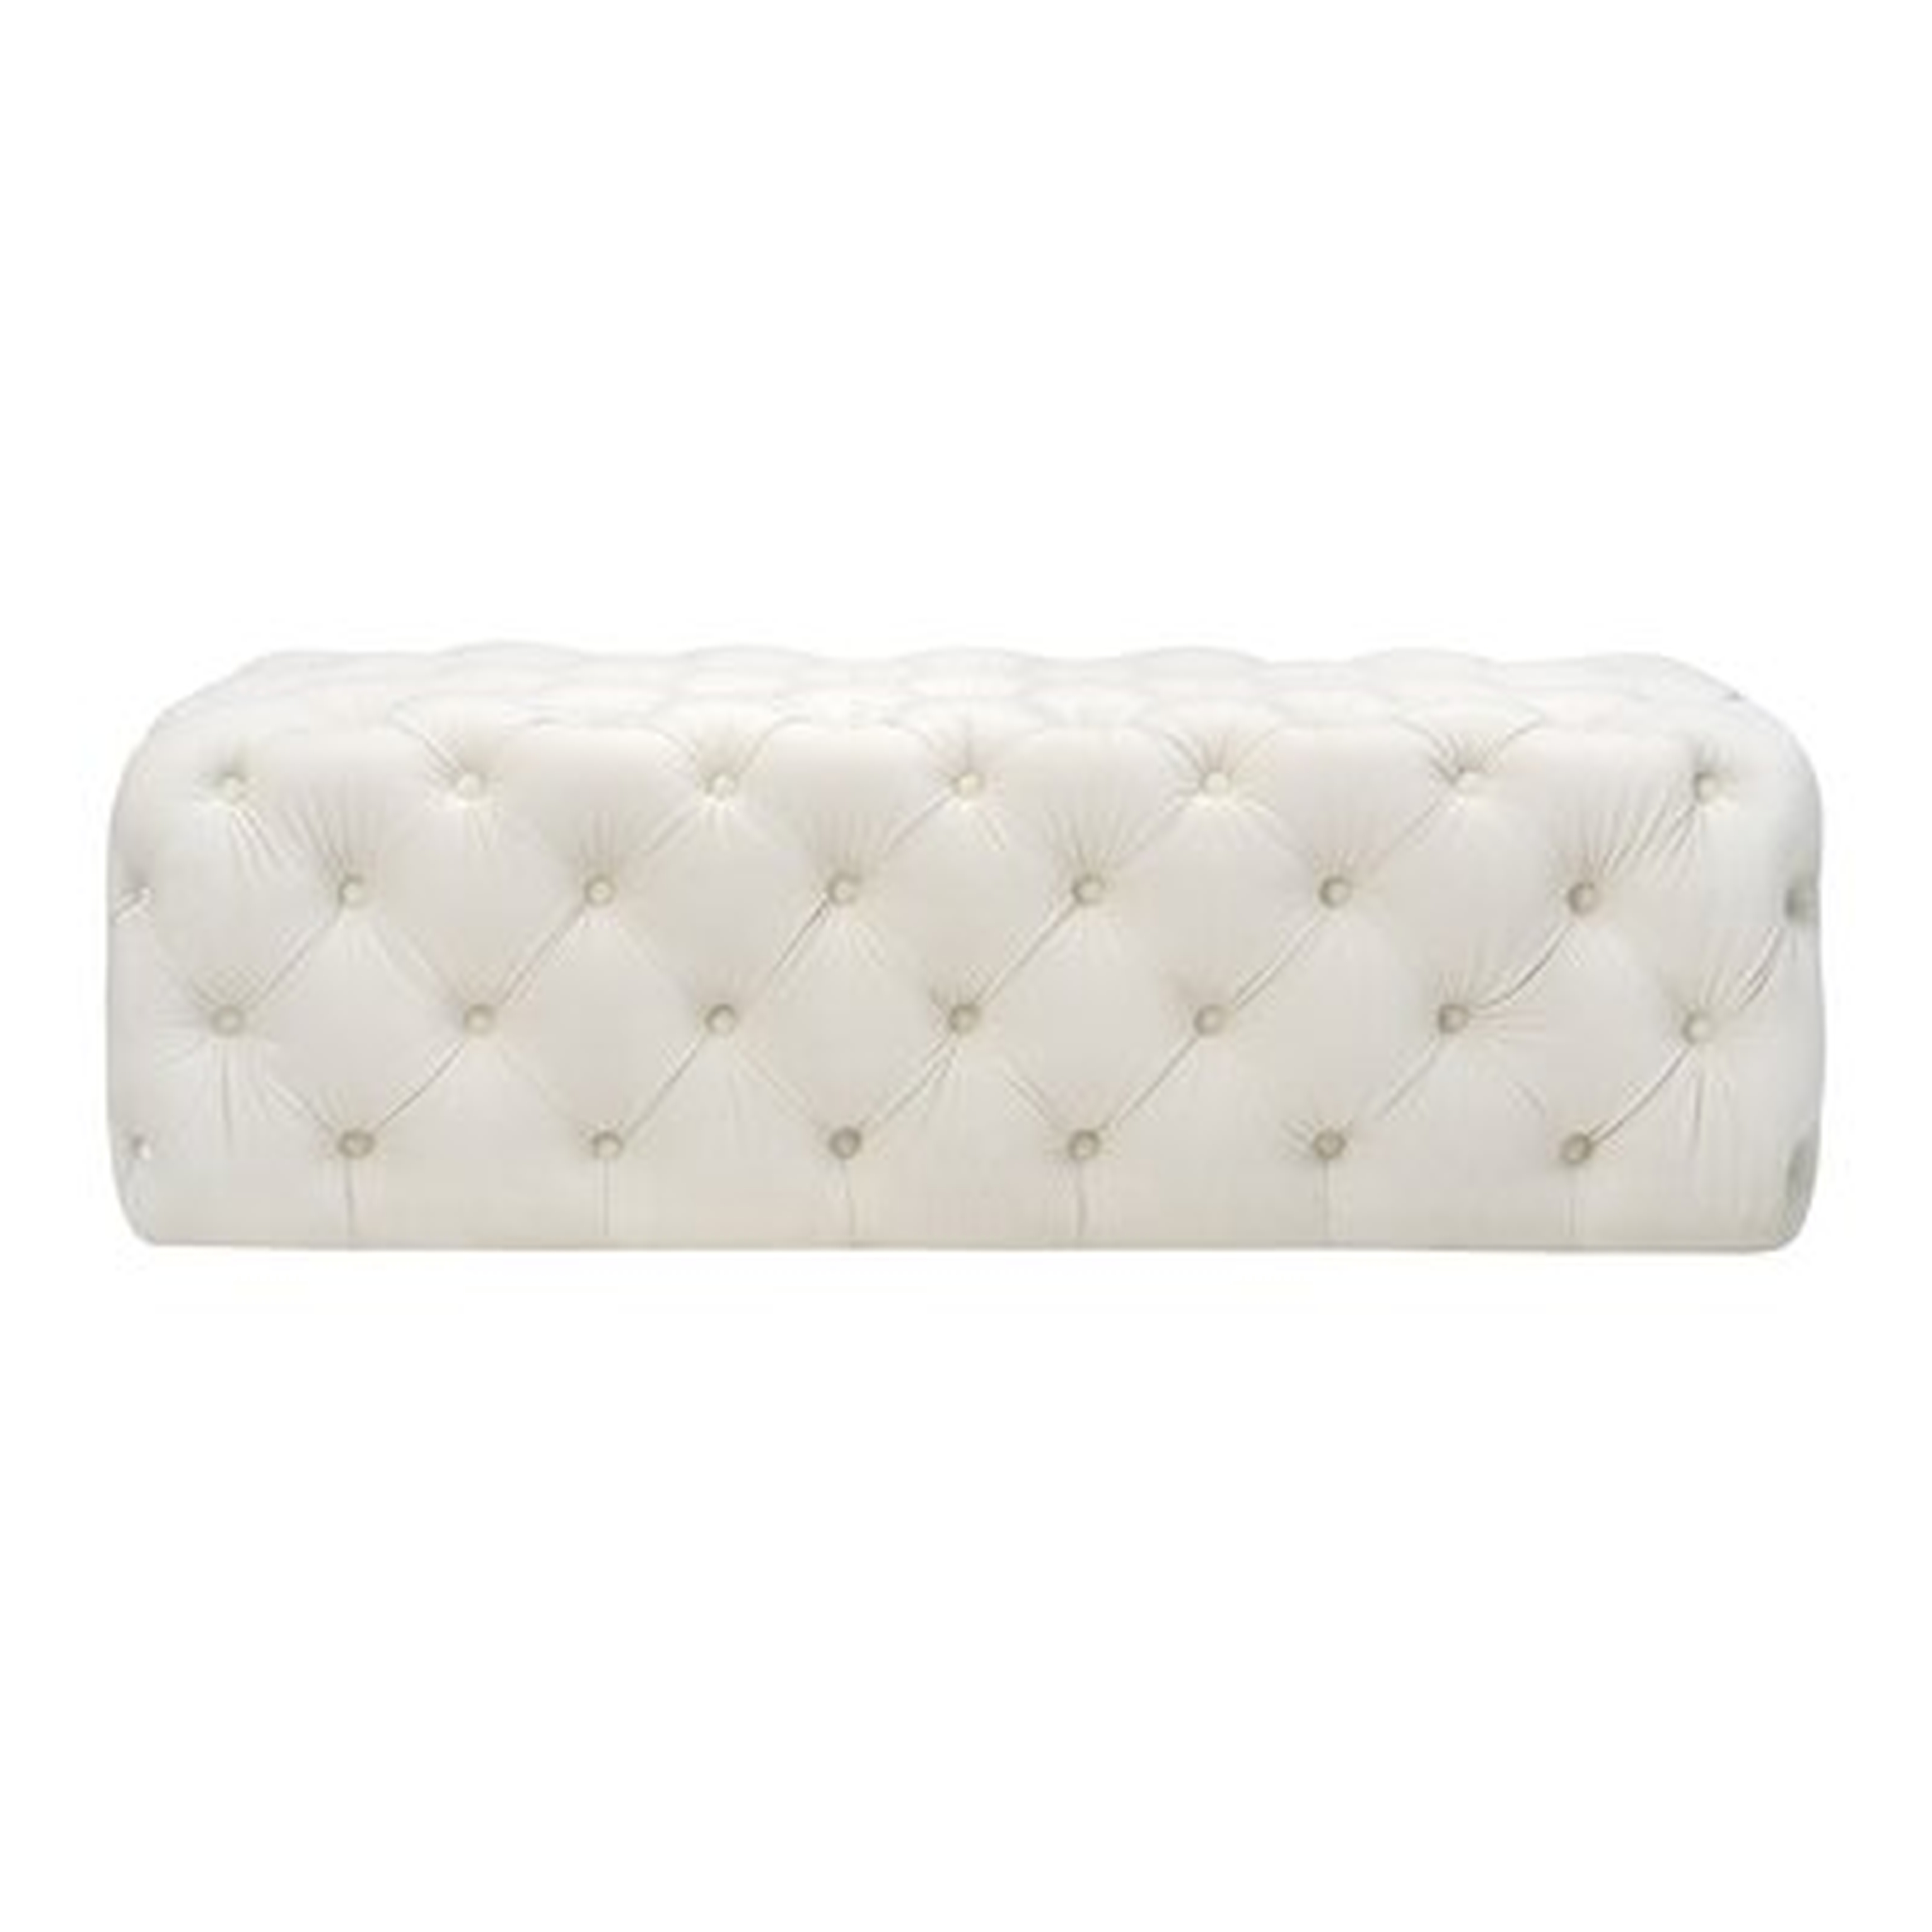 Alfhild Upholstered Bench, Cream - Wayfair